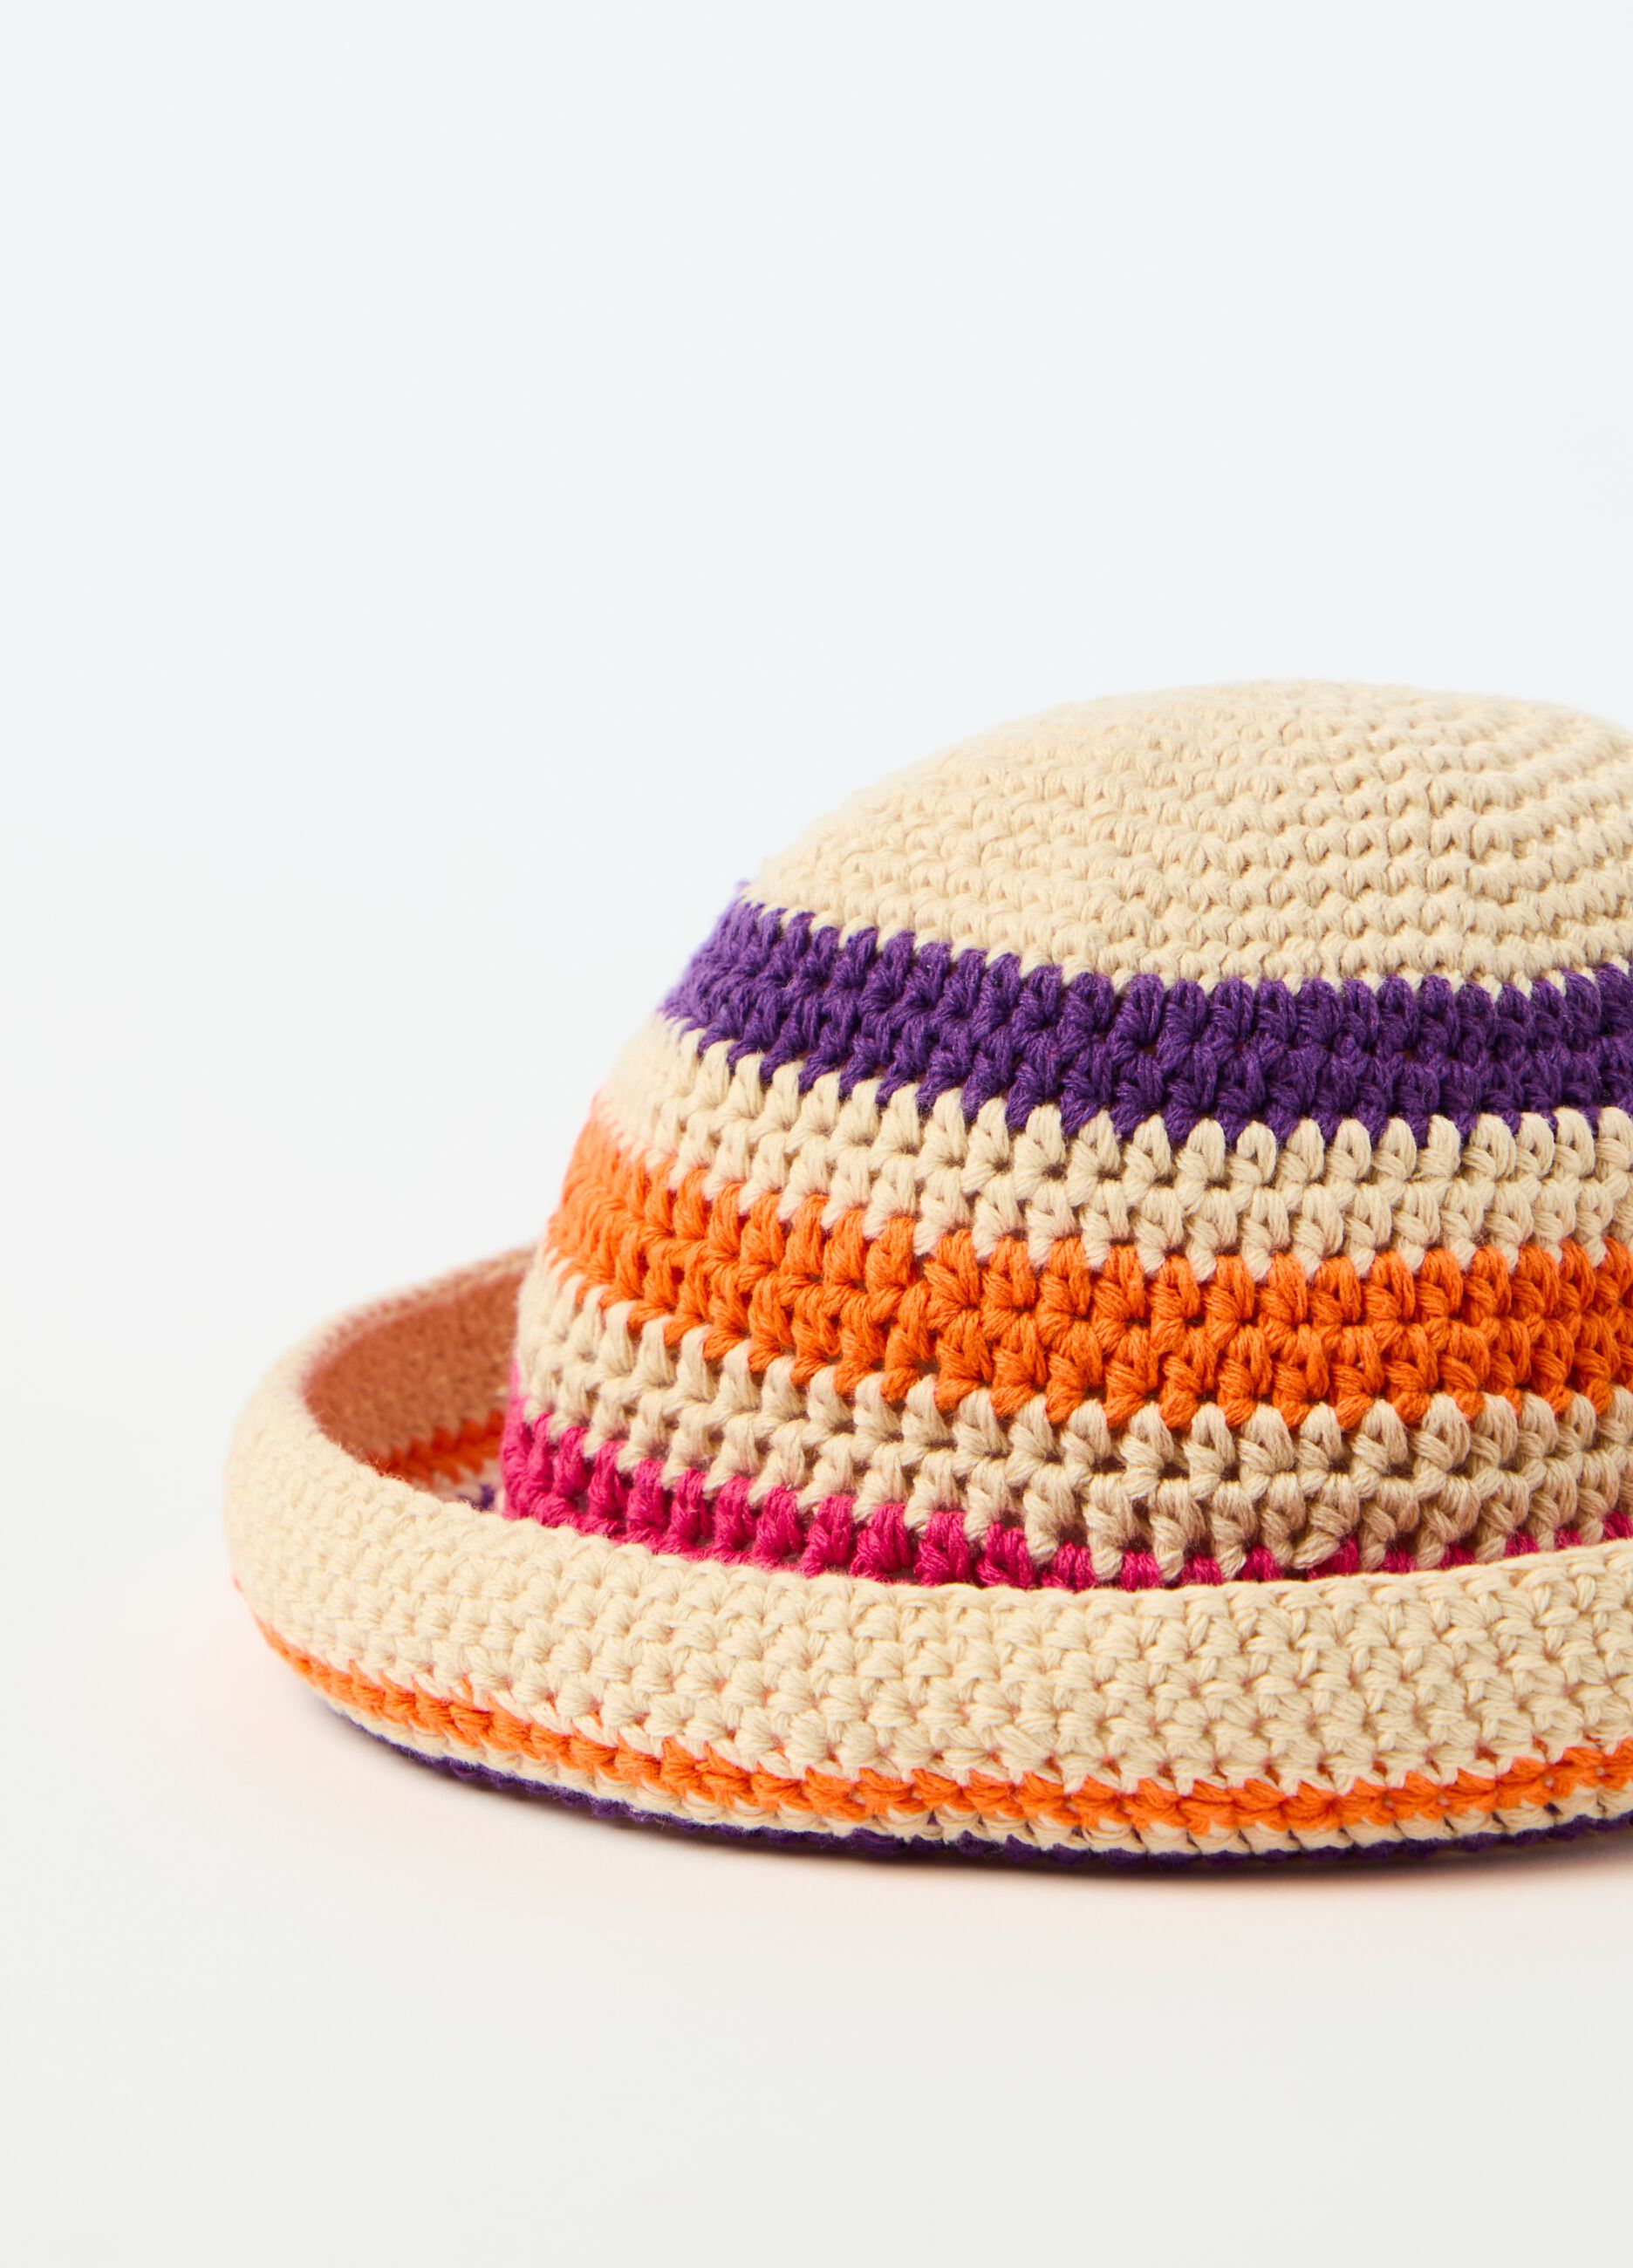 Striped crochet cotton hat